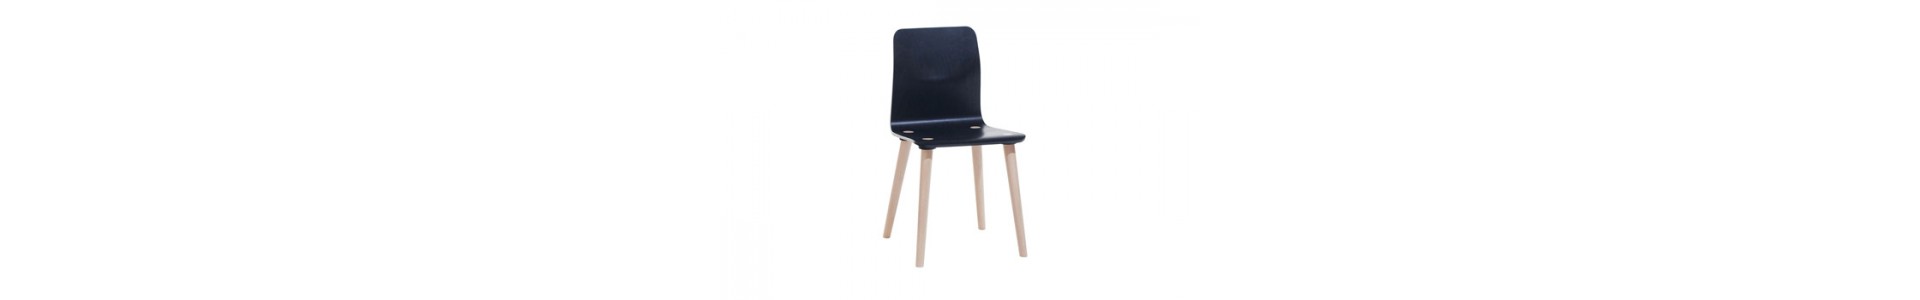 Outlet de sillas de diseñador. Sillas de diseño moderno en oferta. Oferta de sillas